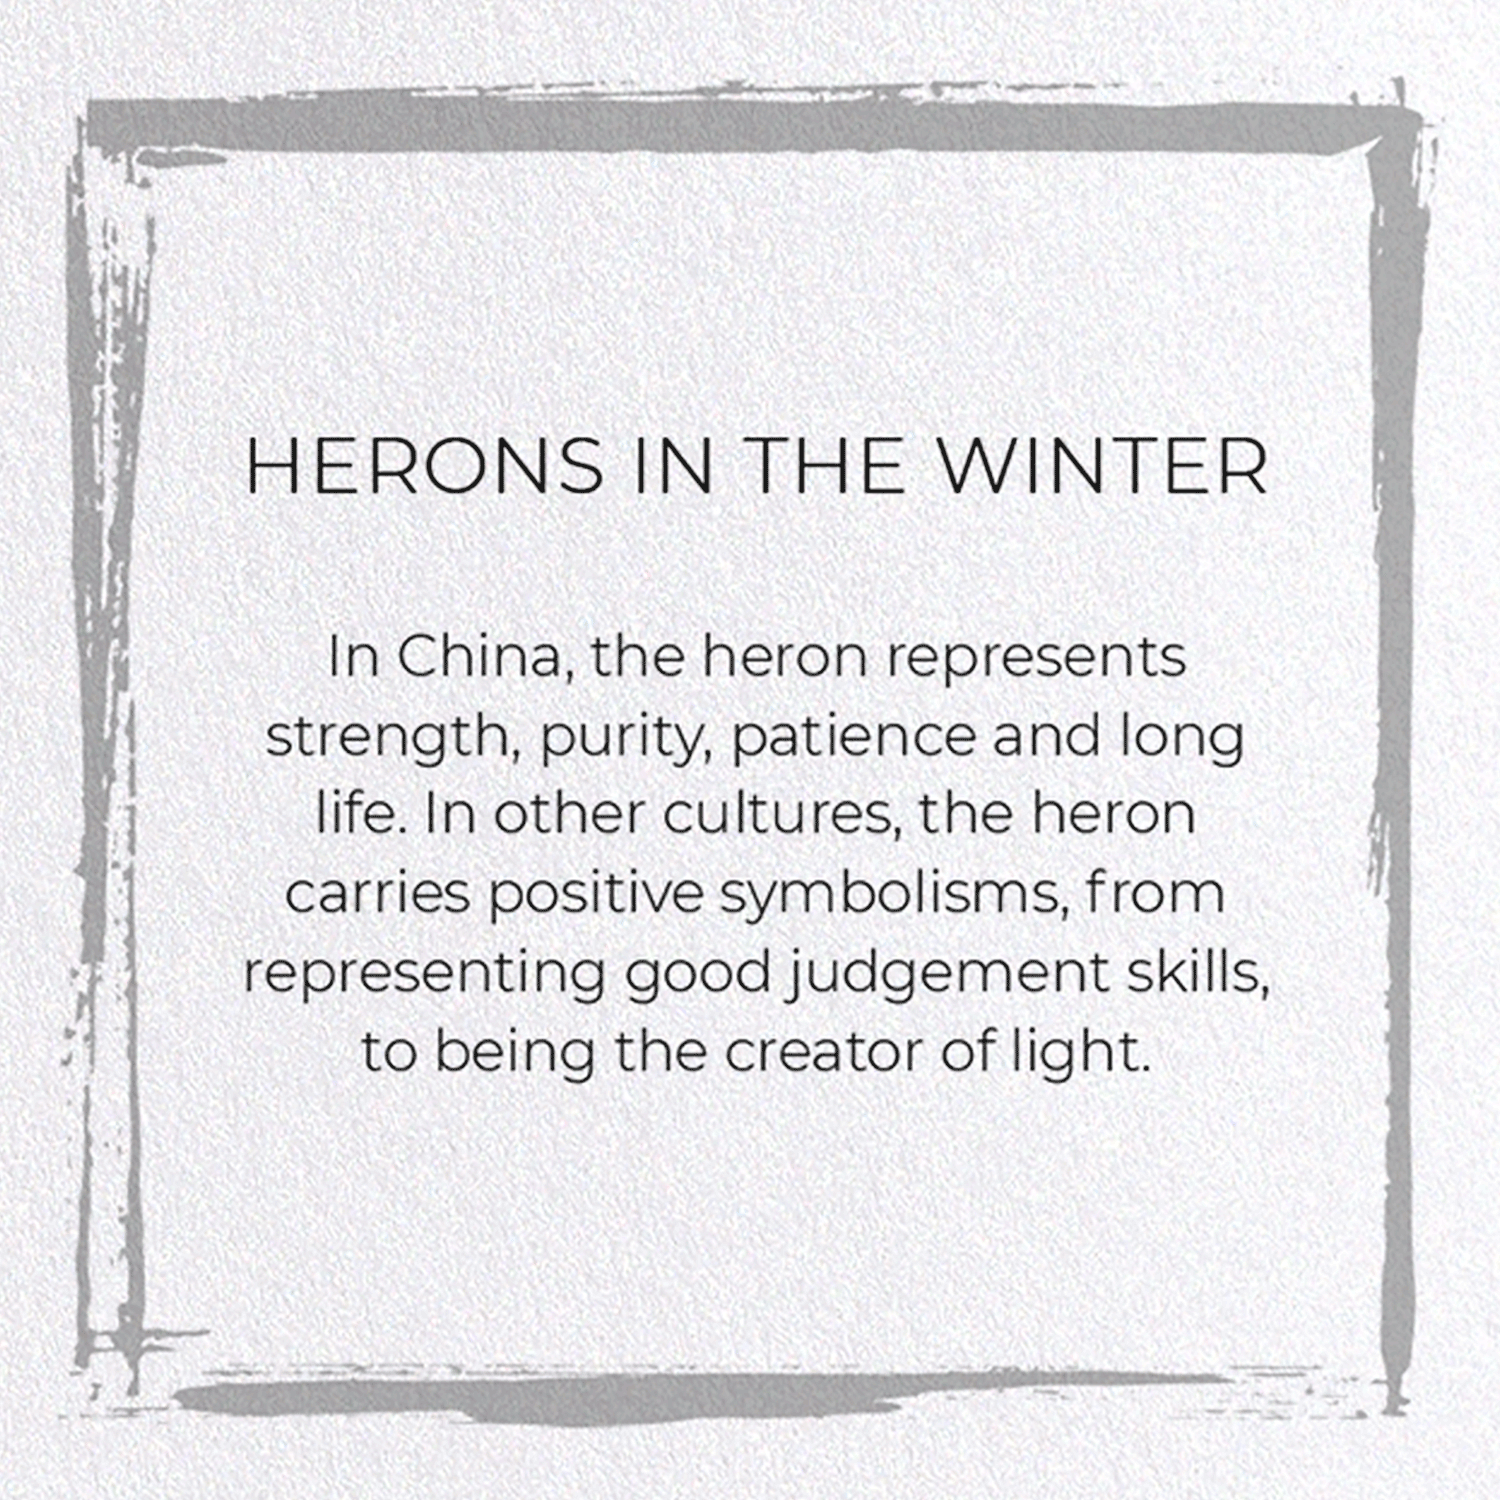 HERONS IN THE WINTER